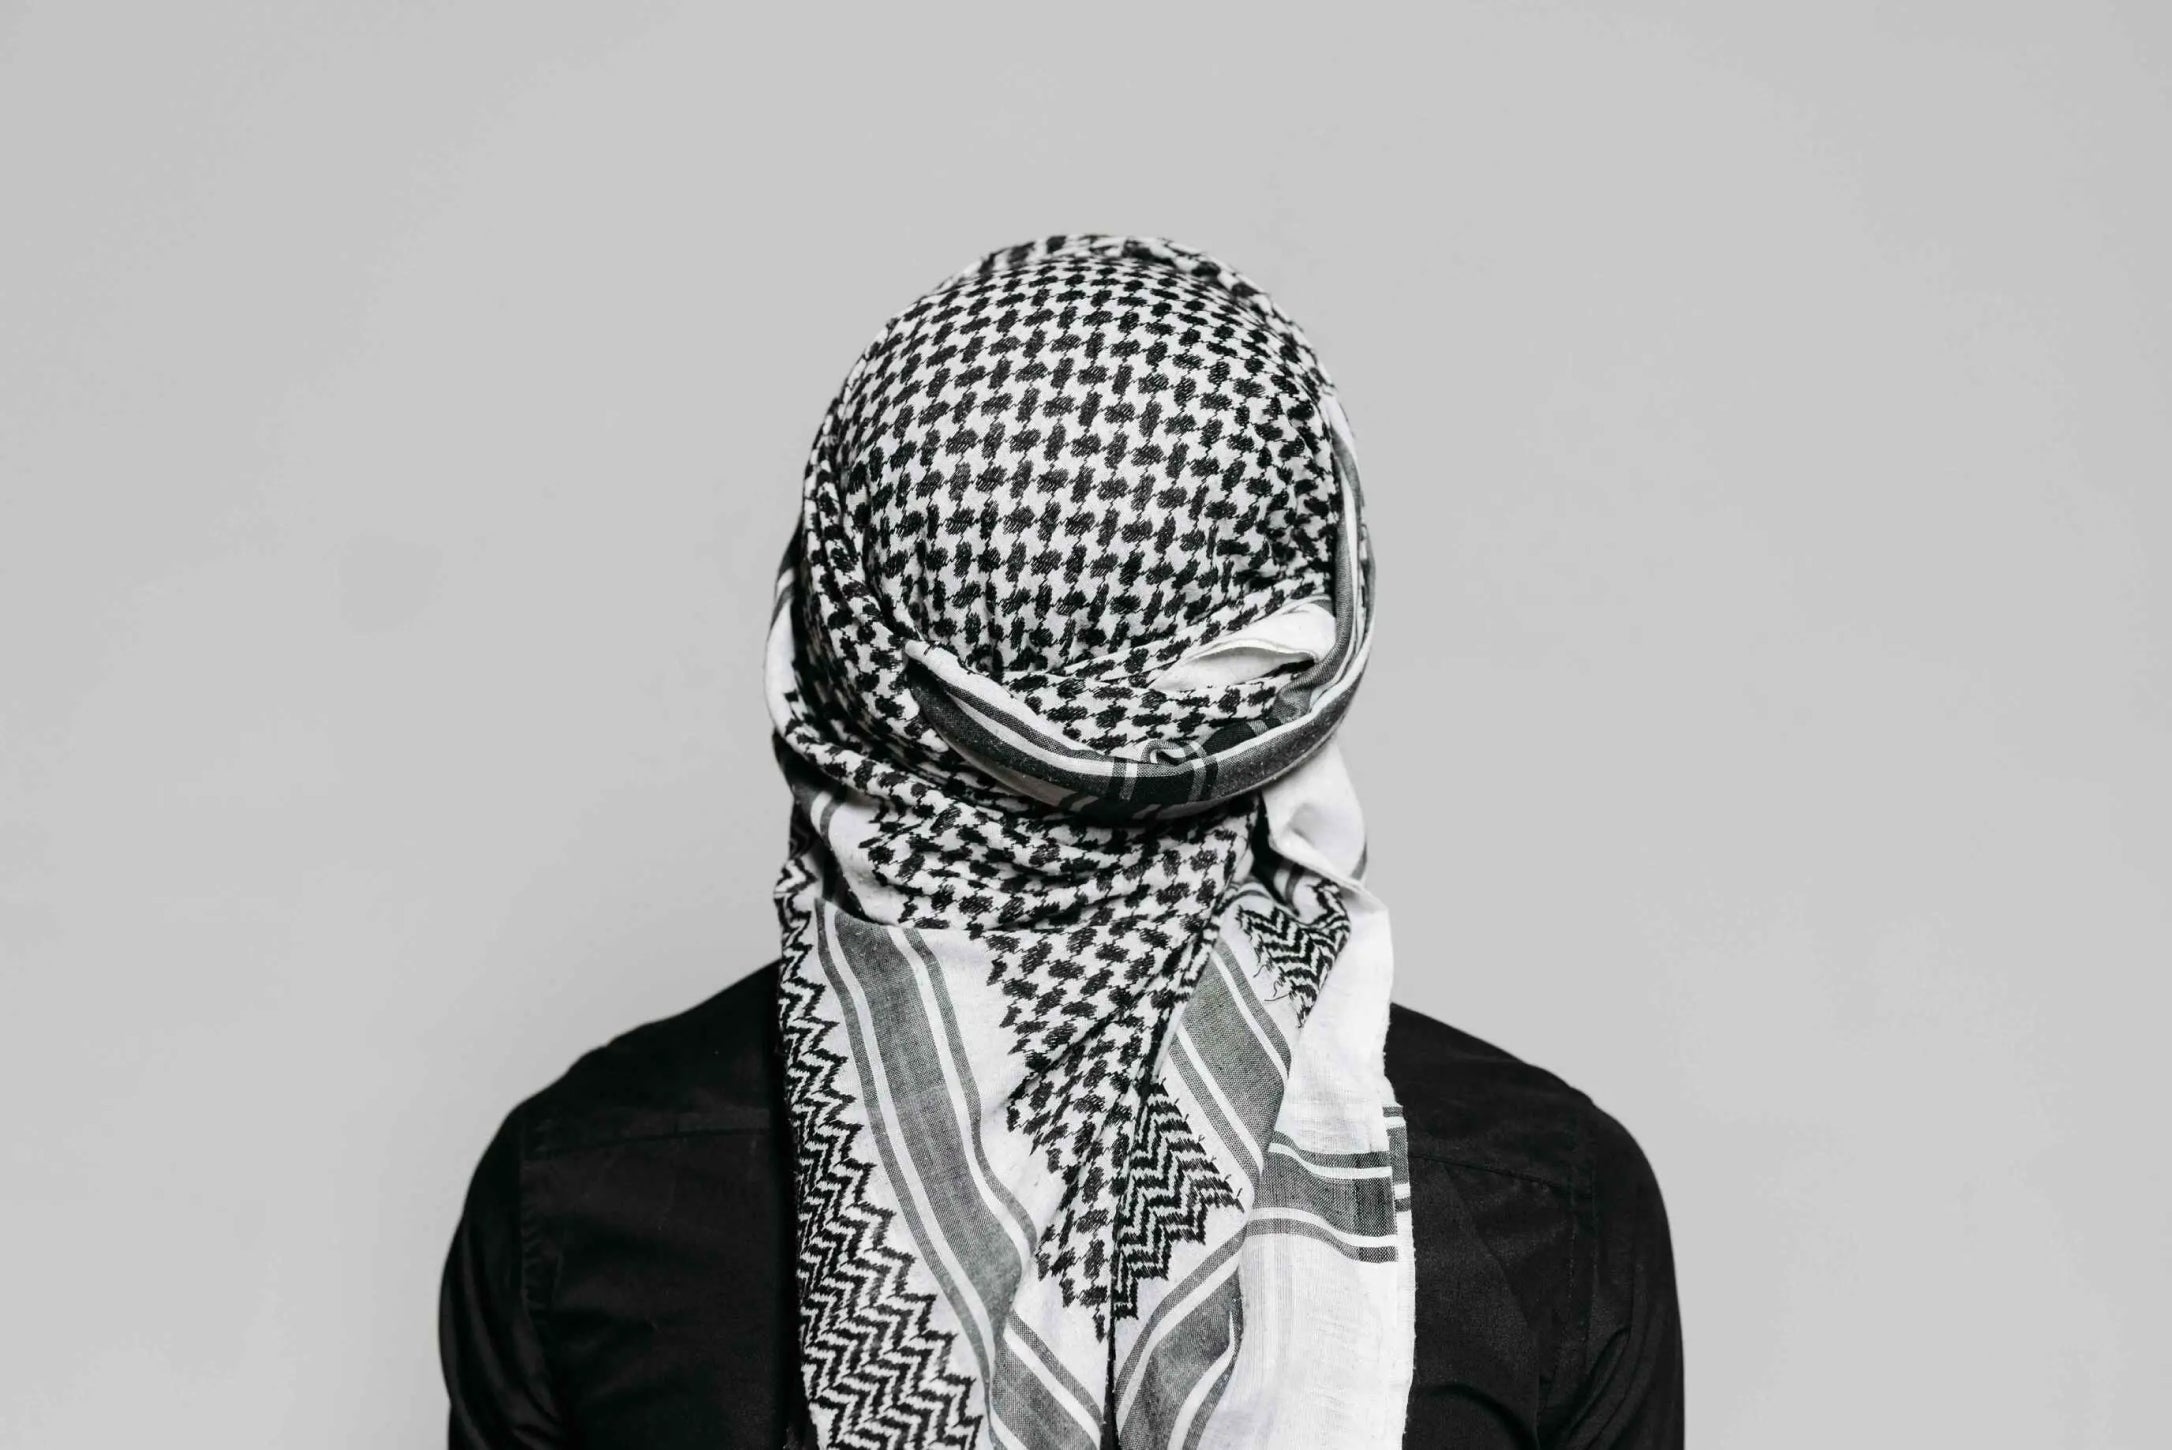 Premium Palestinian Keffiyeh in classic black and white design - Available at Kufiya Corner.